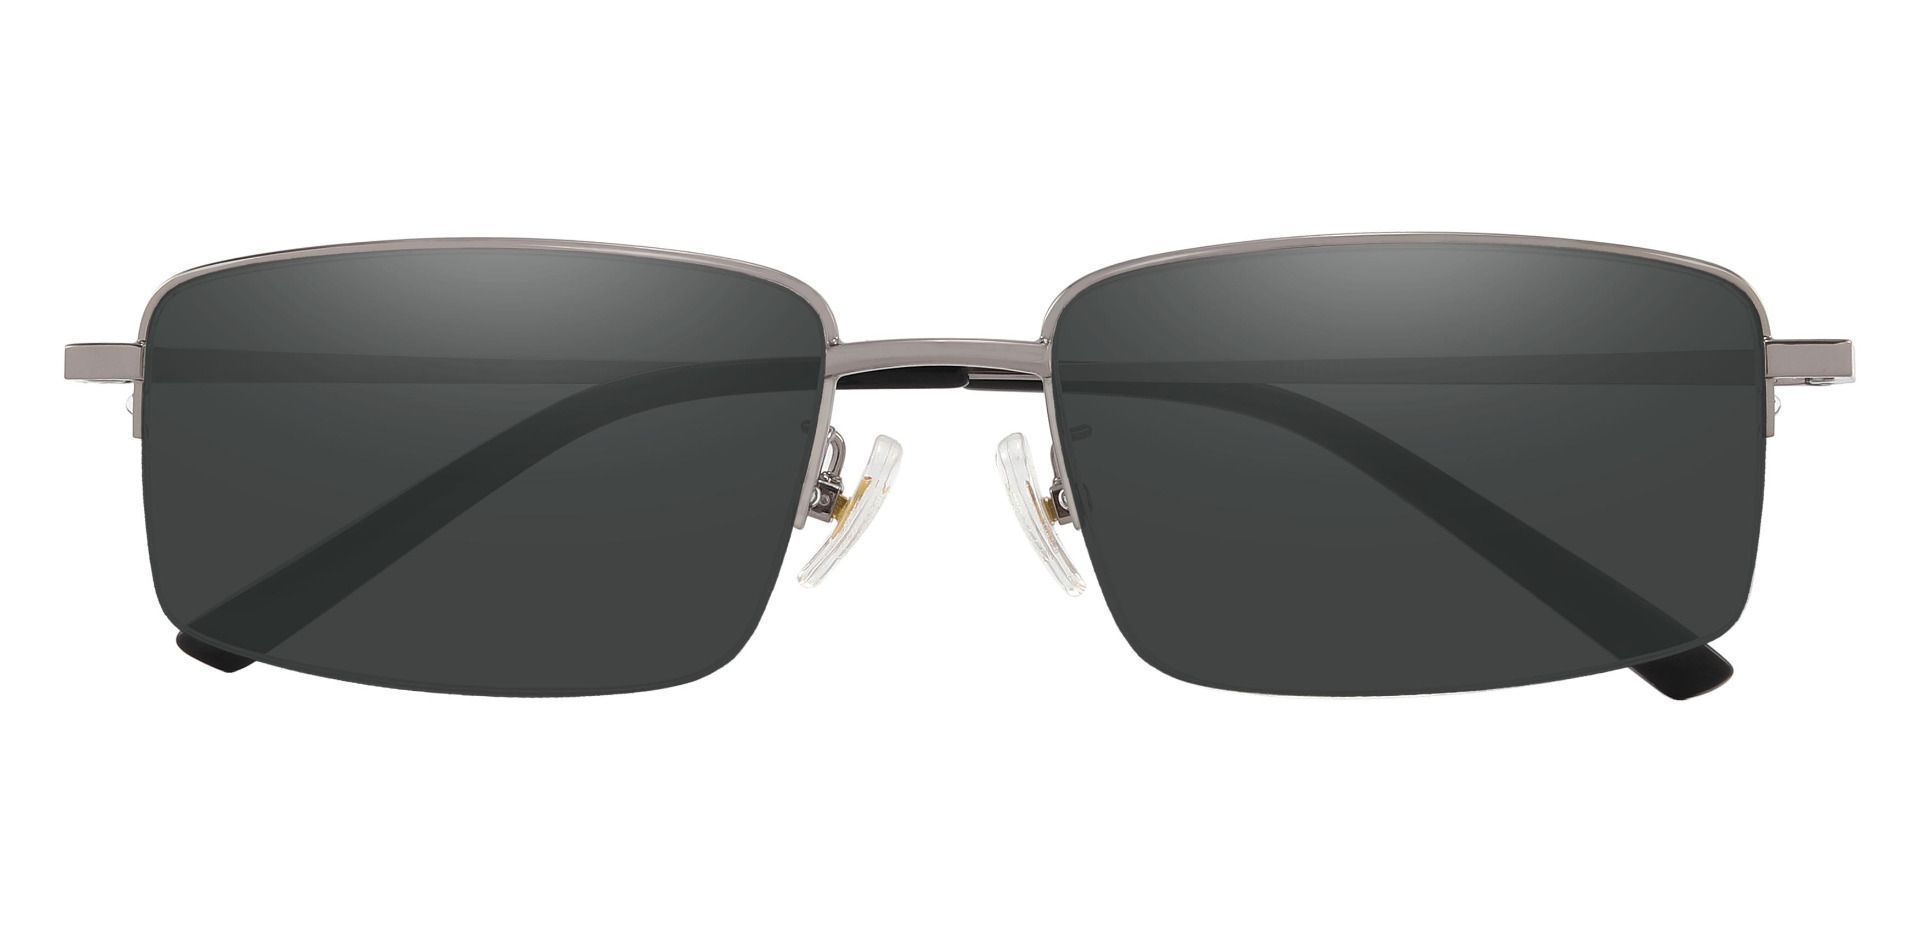 Wayne Rectangle Prescription Sunglasses - Gray Frame With Gray Lenses